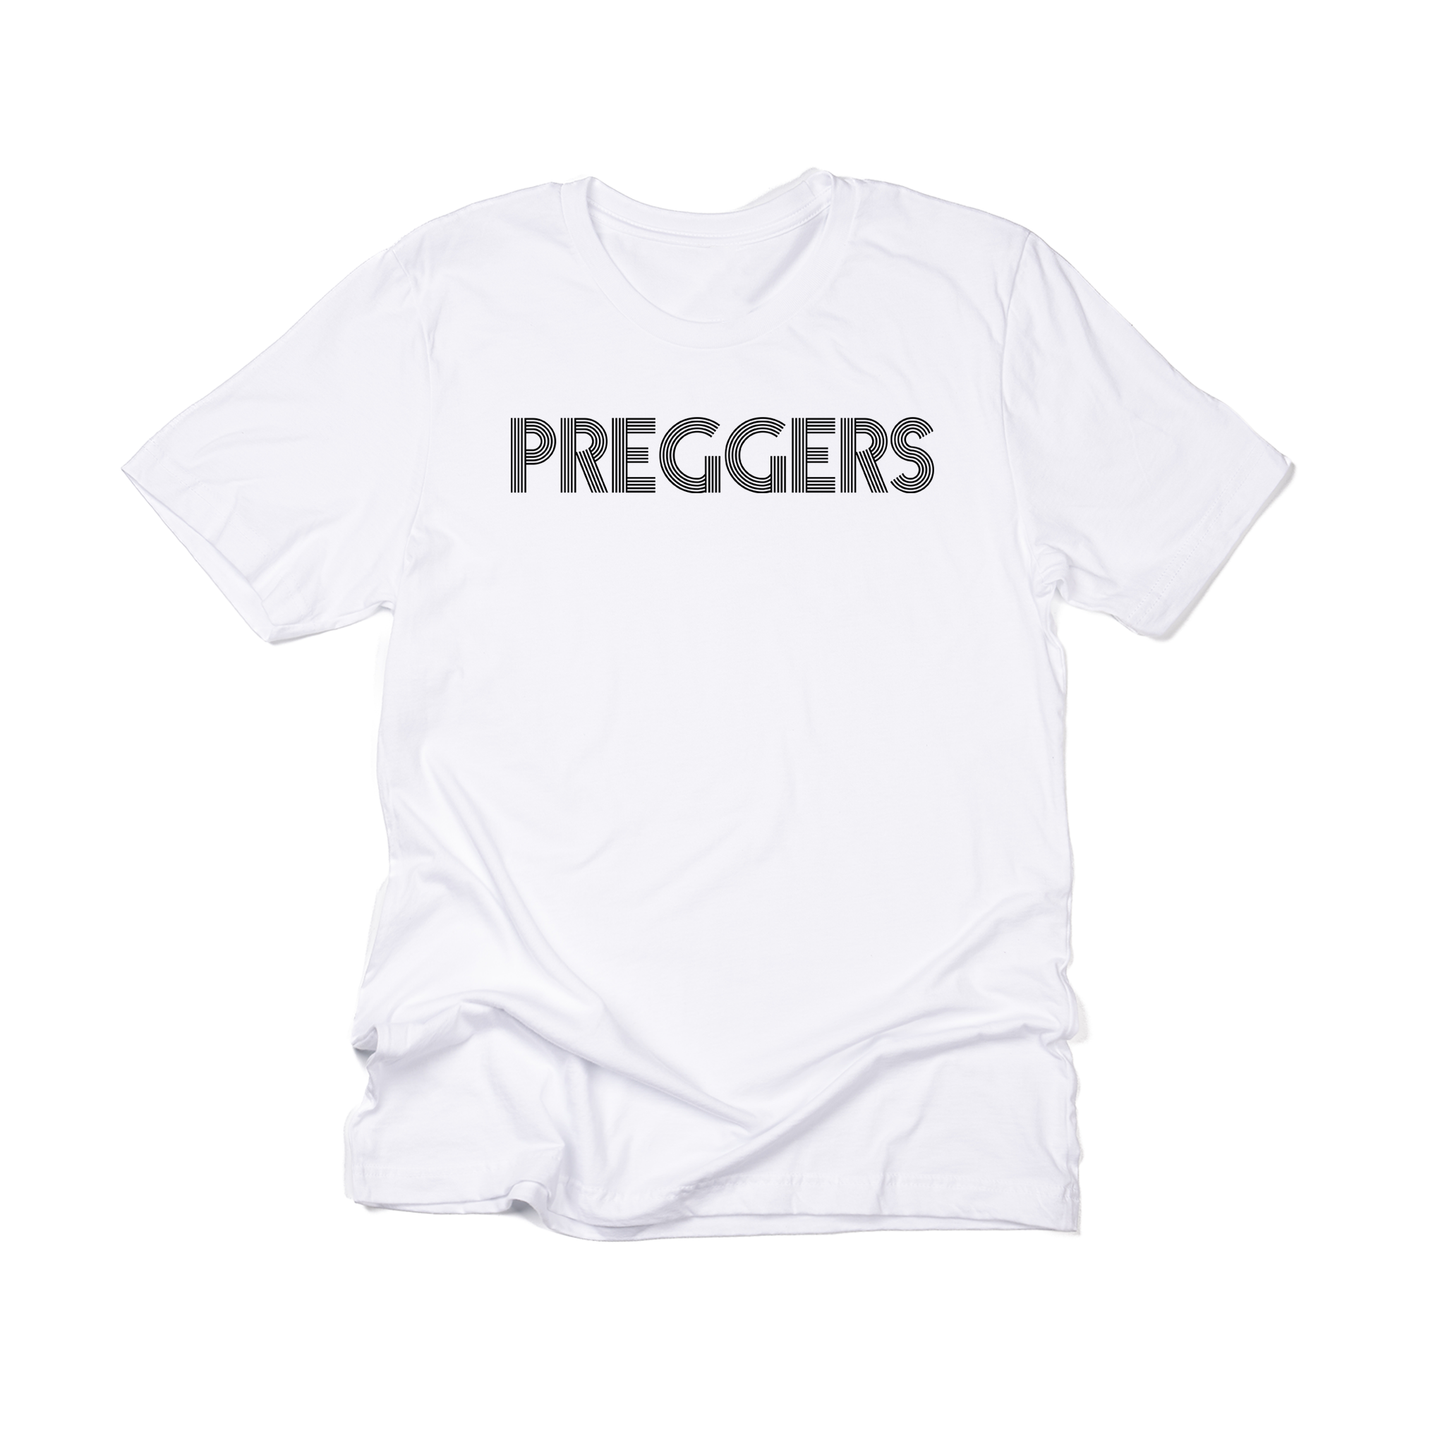 PREGGERS (Black) - Tee (White)